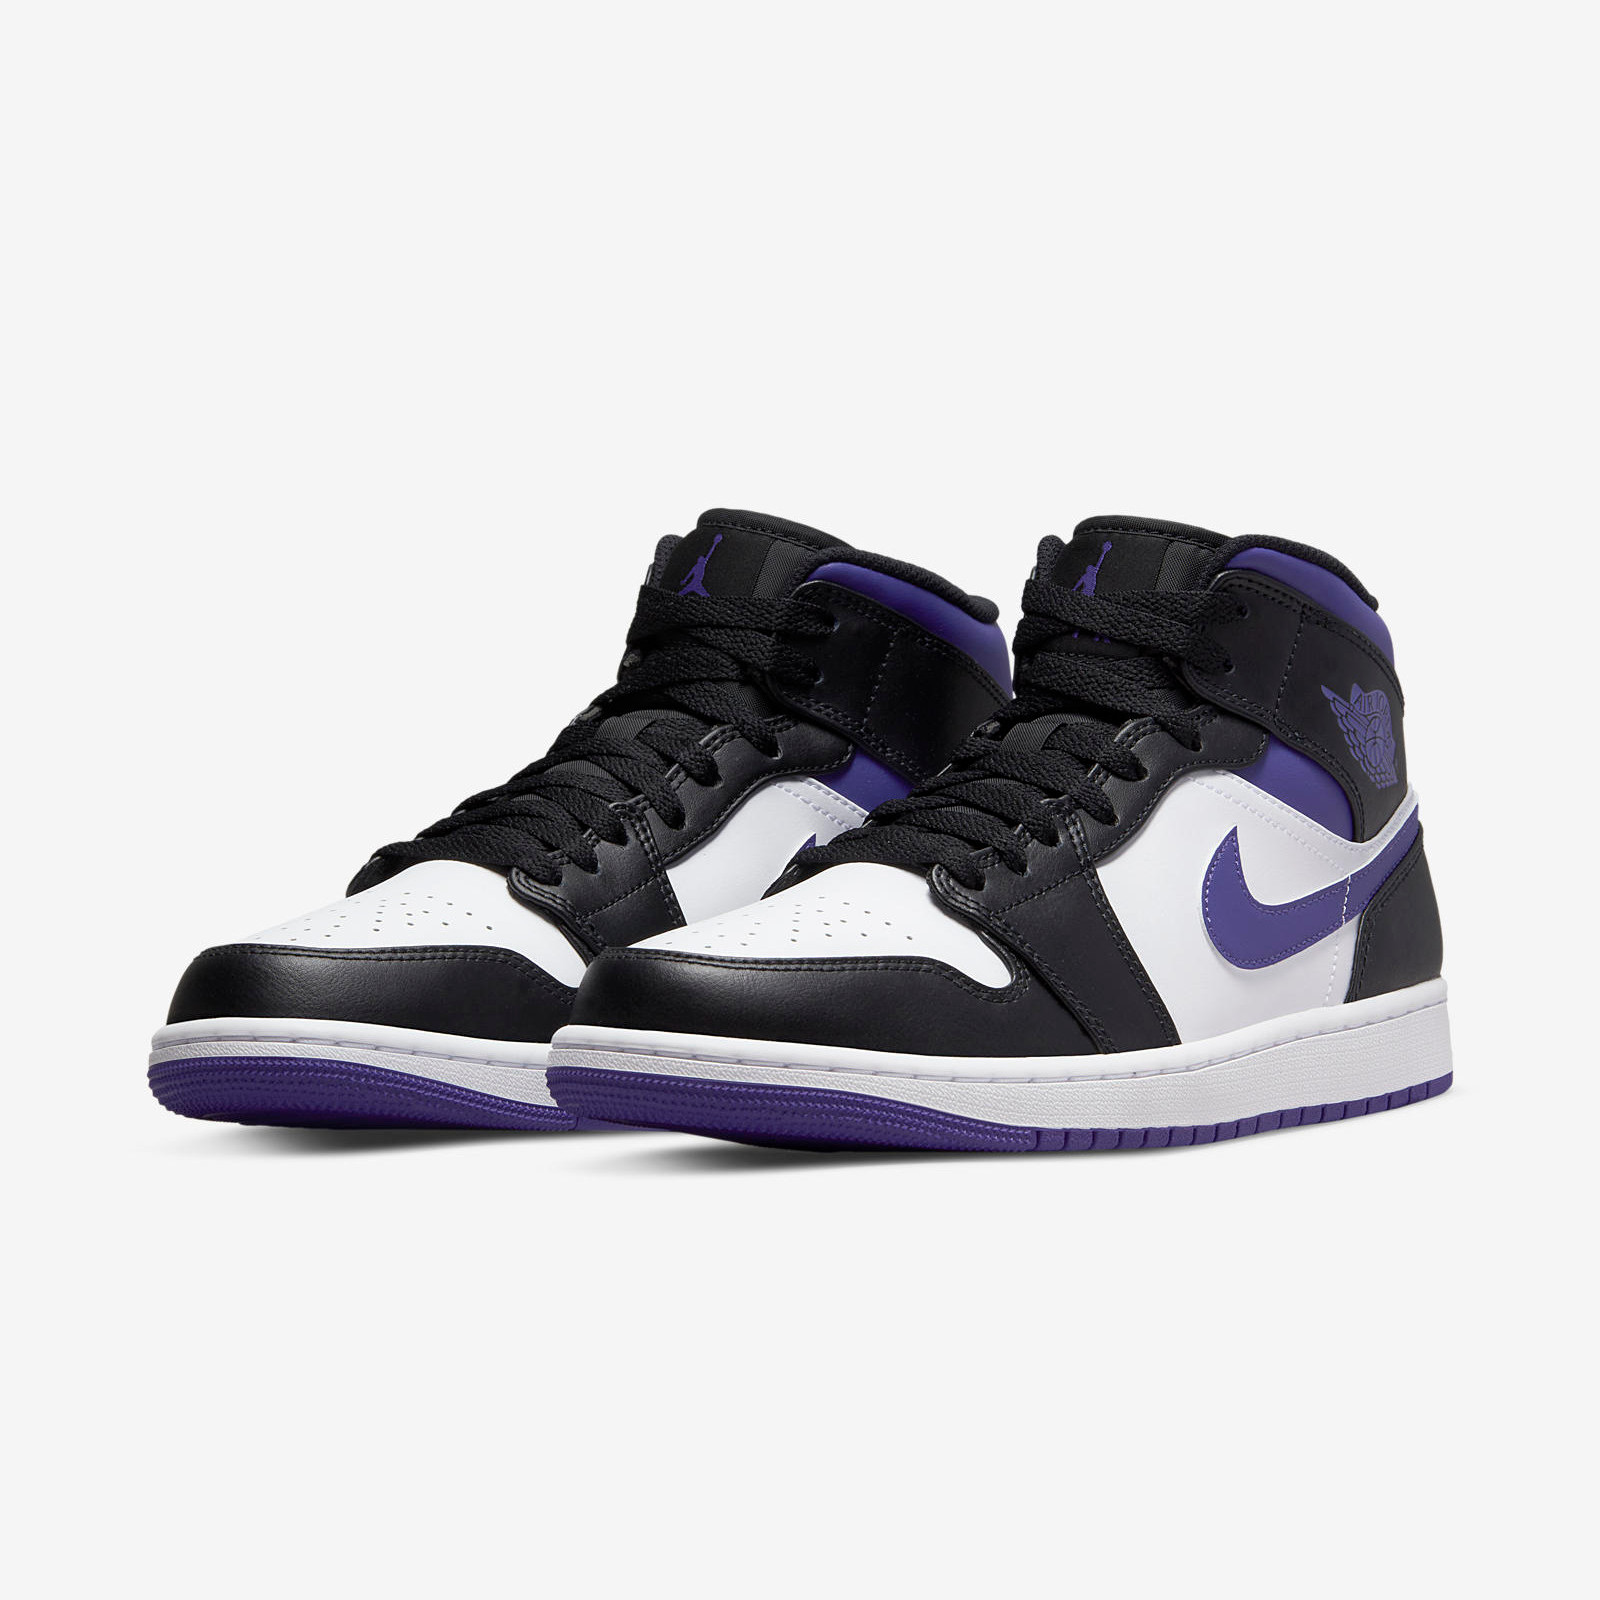 Air Jordan 1 Mid
« Court Purple »